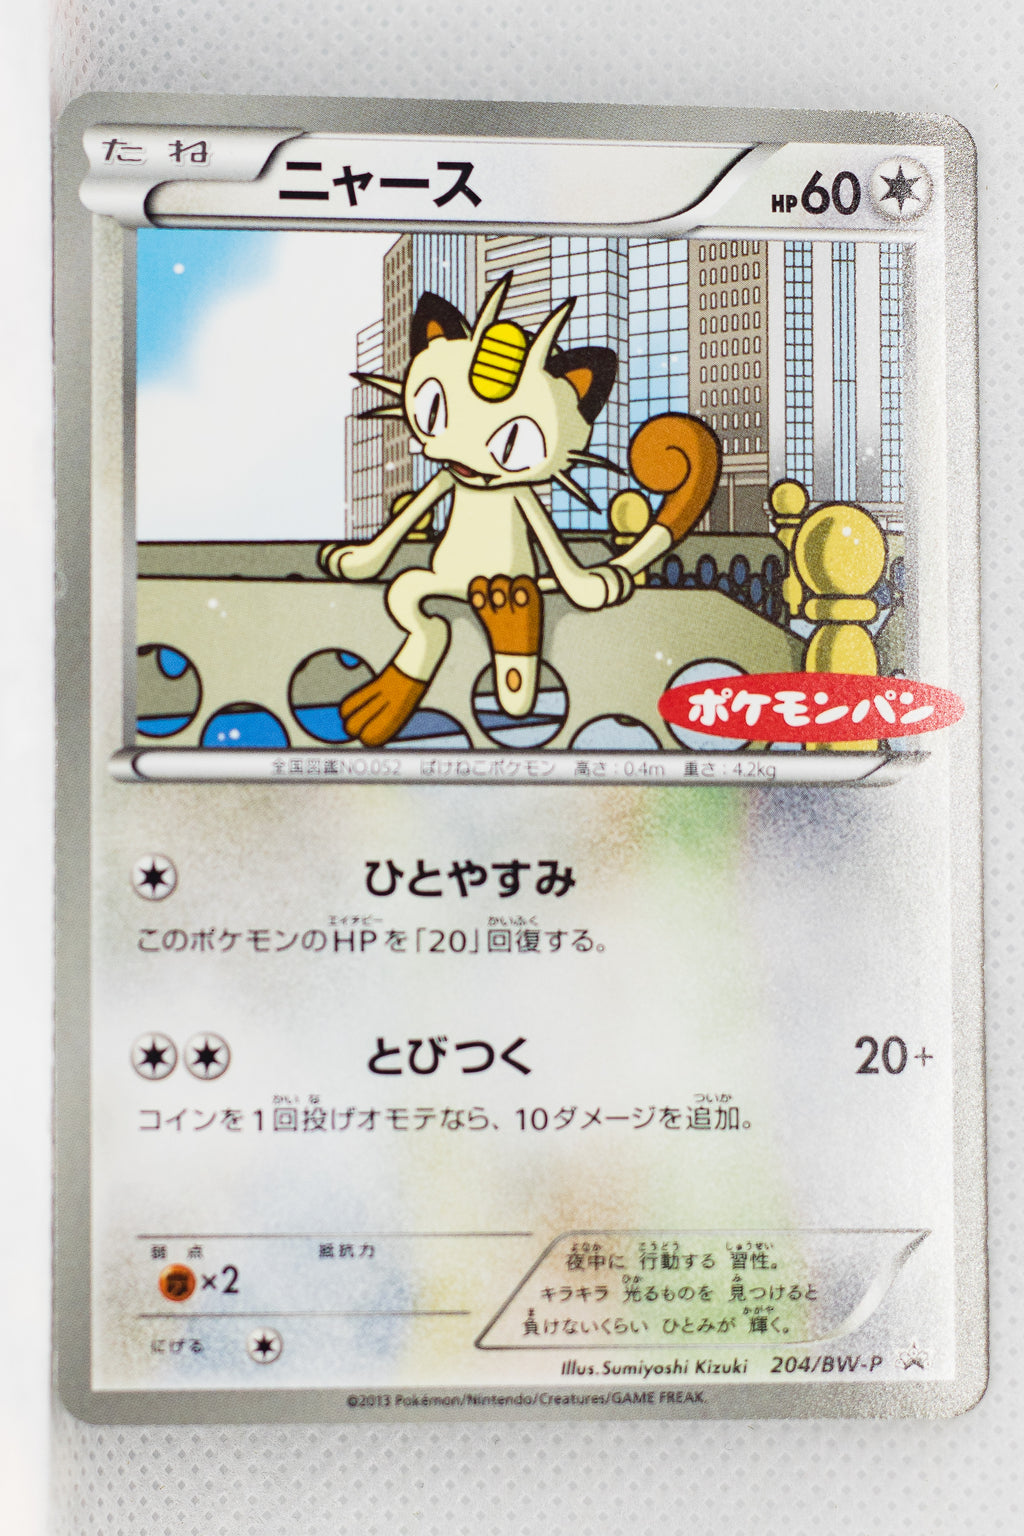 204/BW-P Meowth Daiichi Pan February Pokémon Promotion